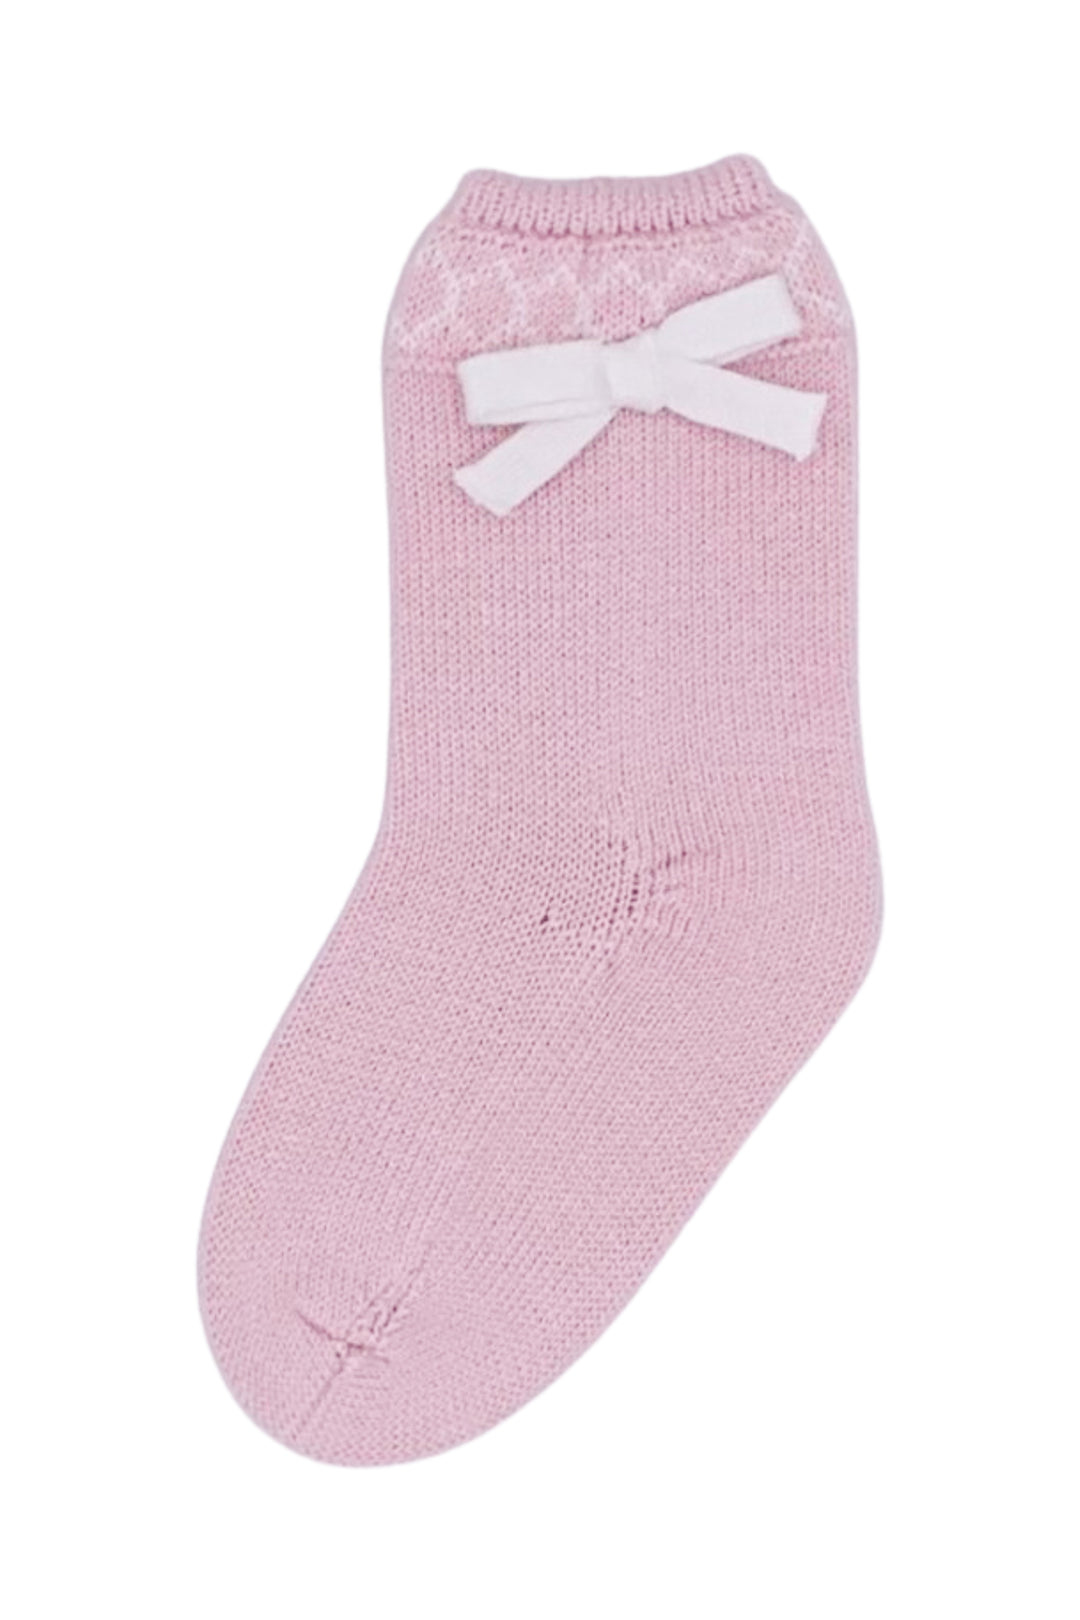 Rahigo Baby Pink Knee High Socks | Millie and John